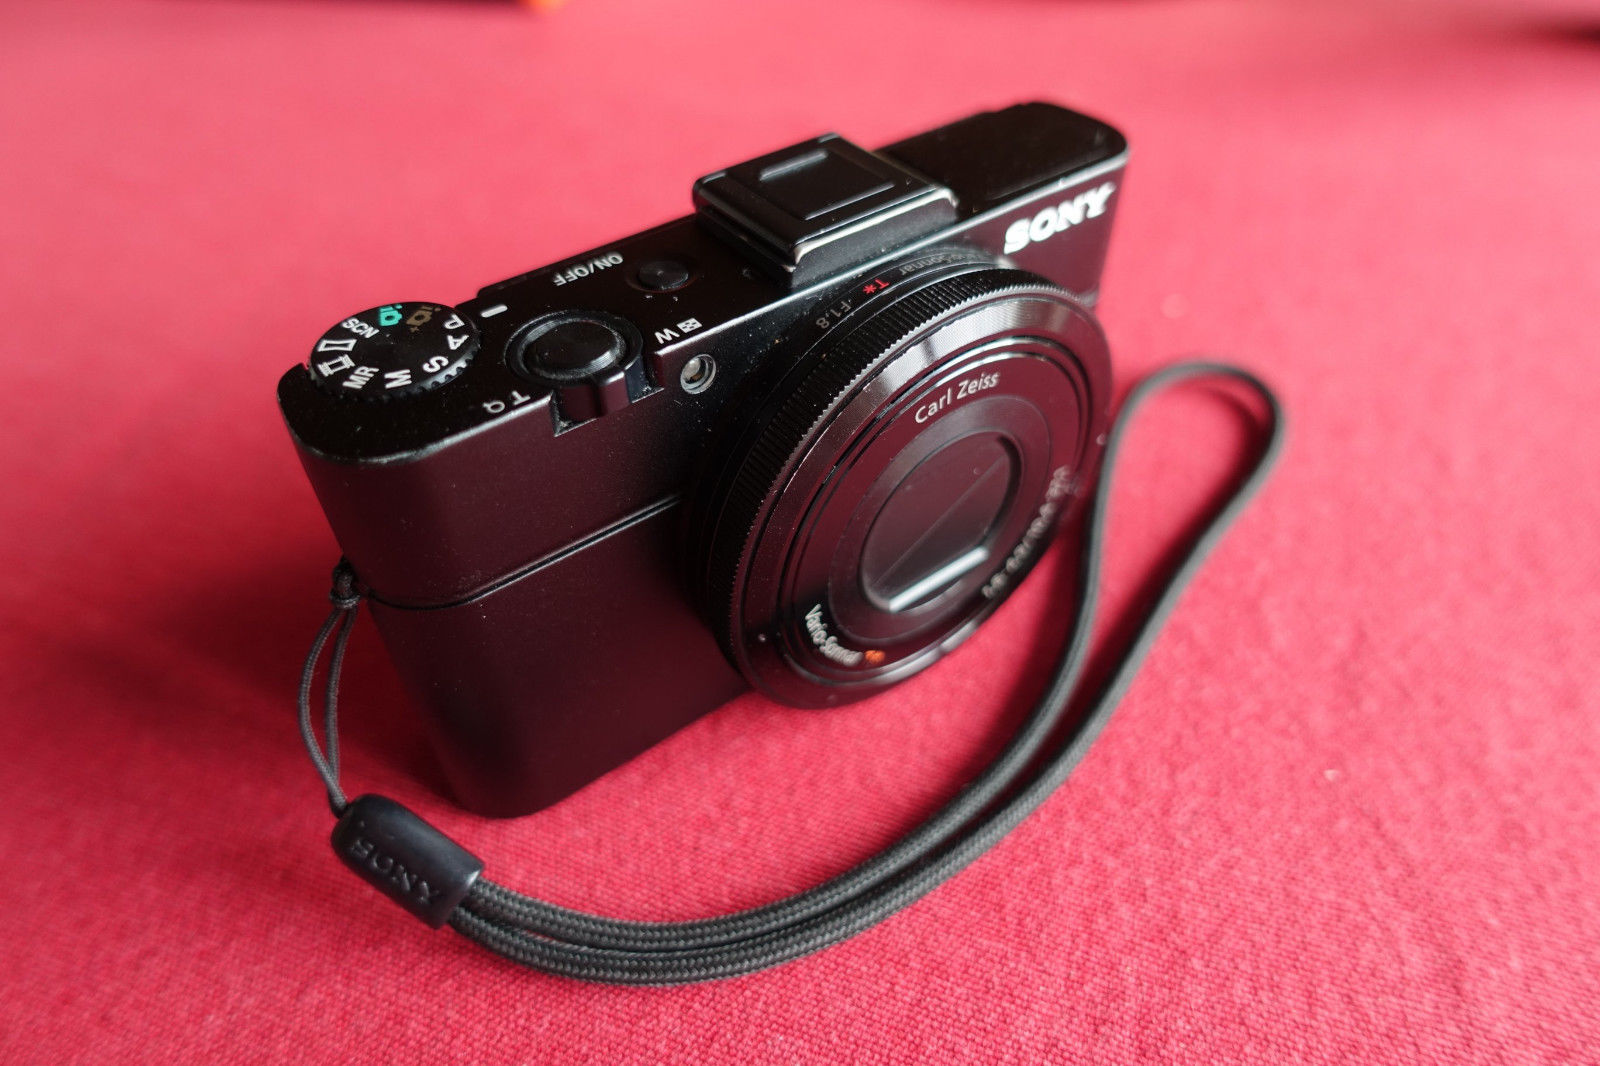 Sony Cyber-shot DSC-RX100M2 20.2 MP Digitalkamera - Schwarz